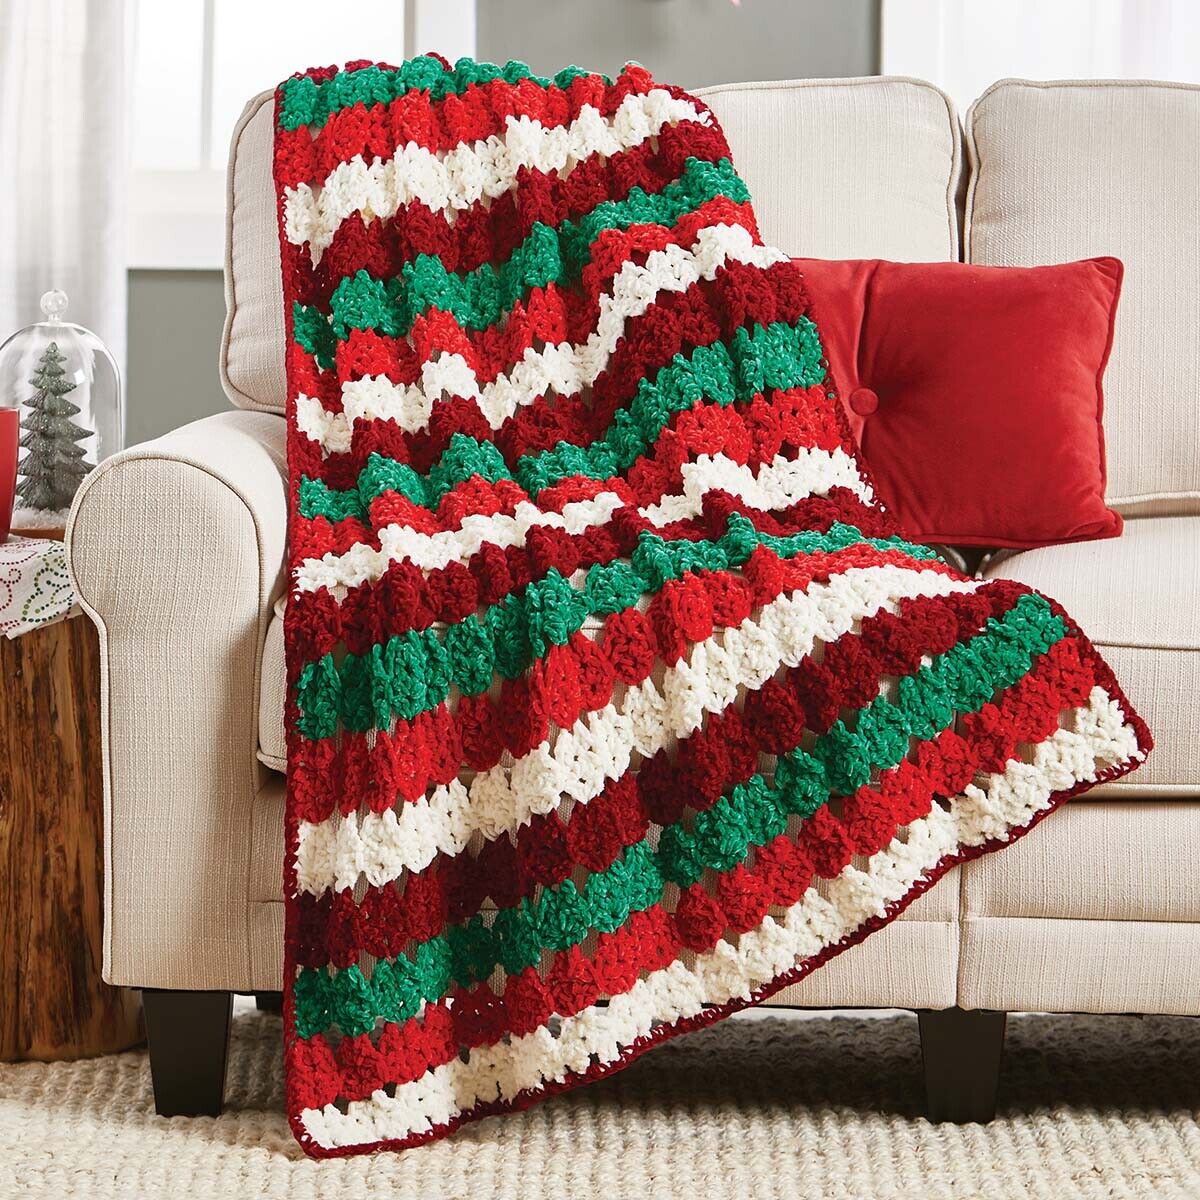 Herrschners® Jingle Jangle Crochet Afghan Kit